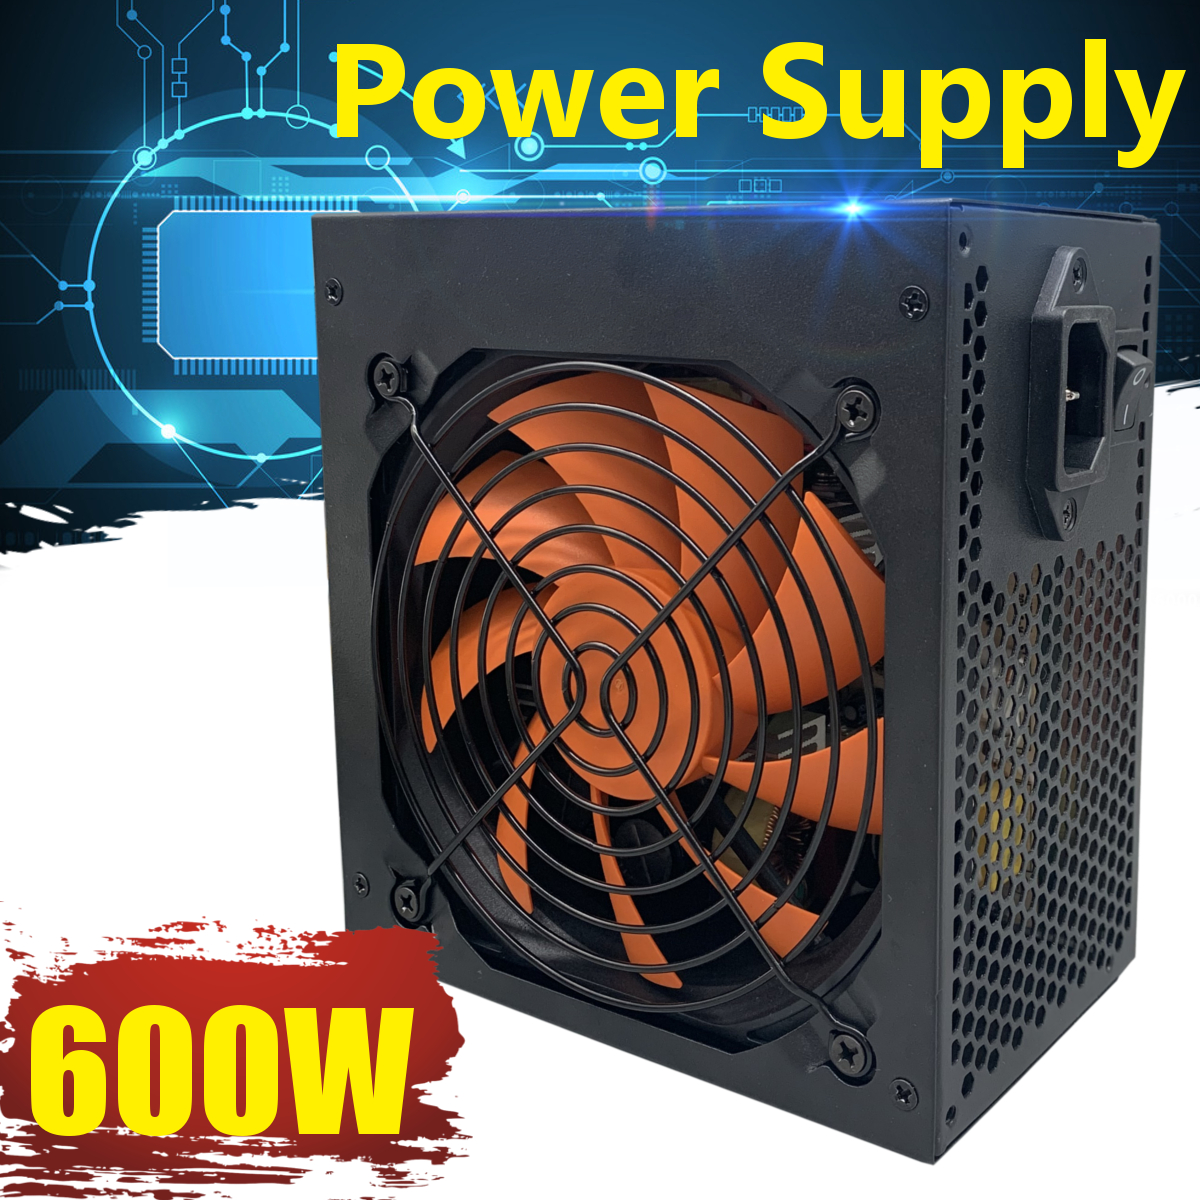 450W-Gaming-PC-Desktop-Computer-ATX-12V-Power-Supply-24-Pin-PCI-120mm-LED-Fan-1709950-1